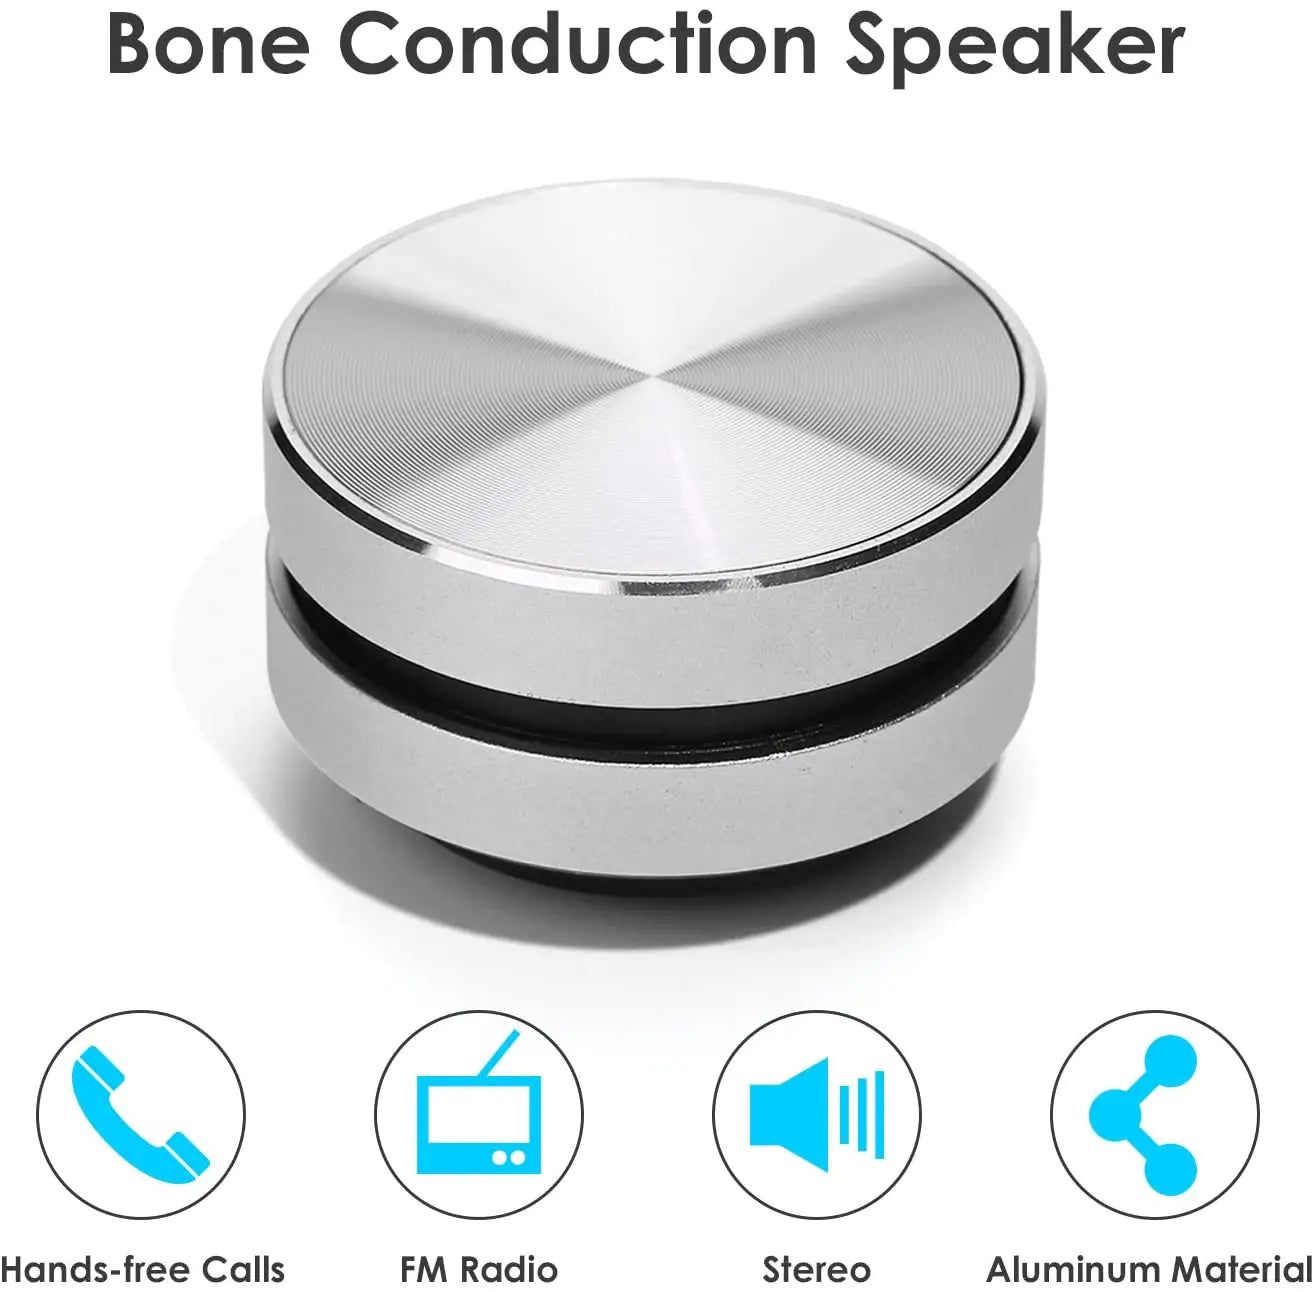 Bone Conduction Speaker